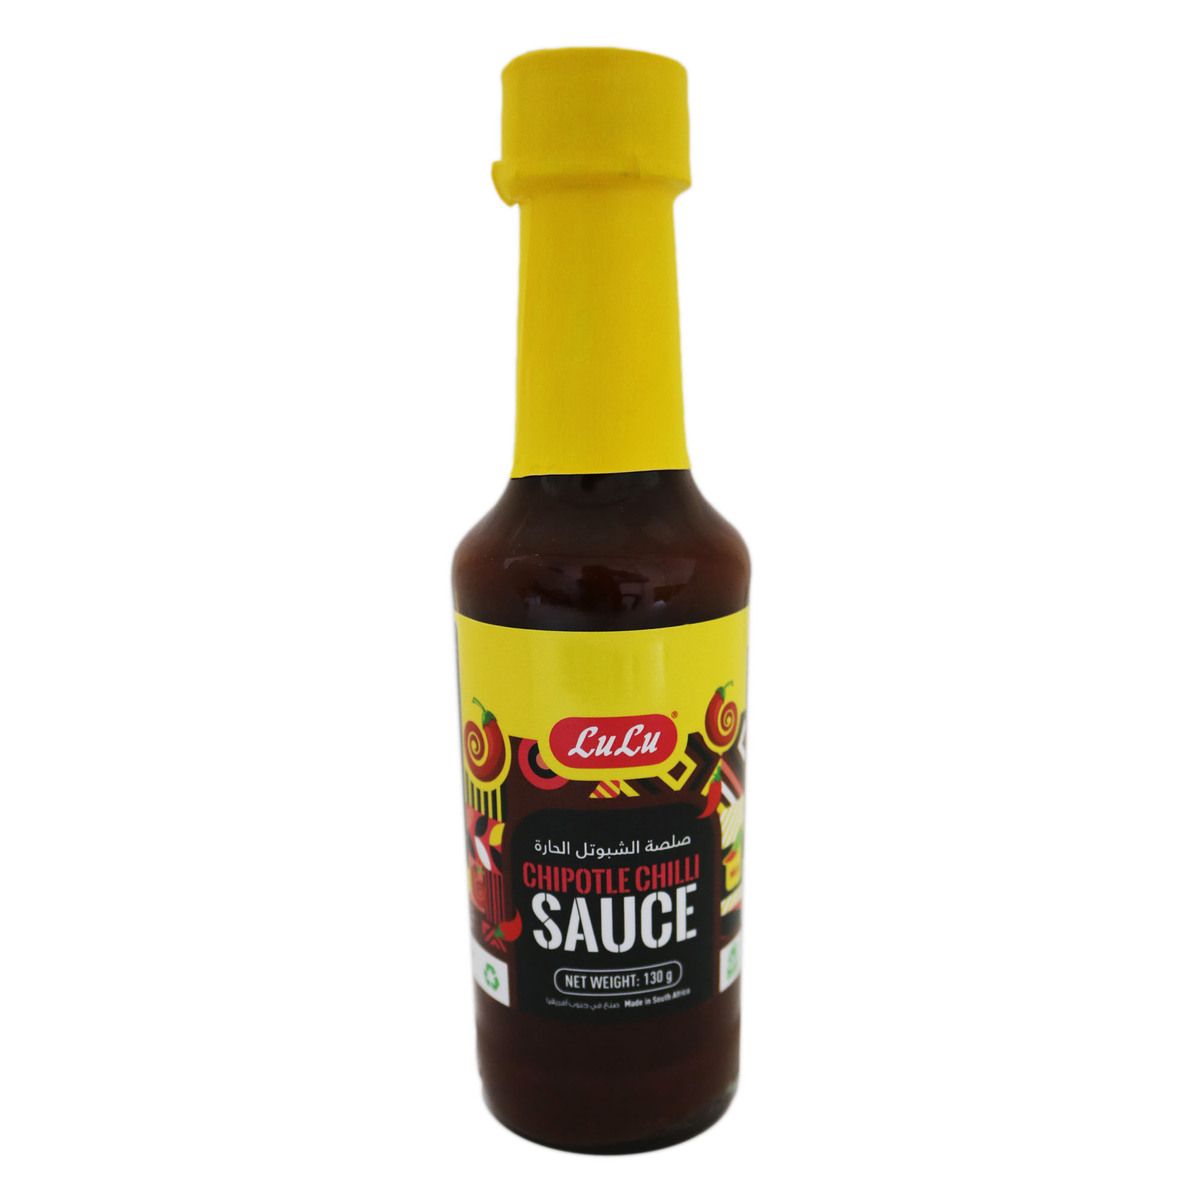 Lulu Chipotle Chilli Sauce 130g